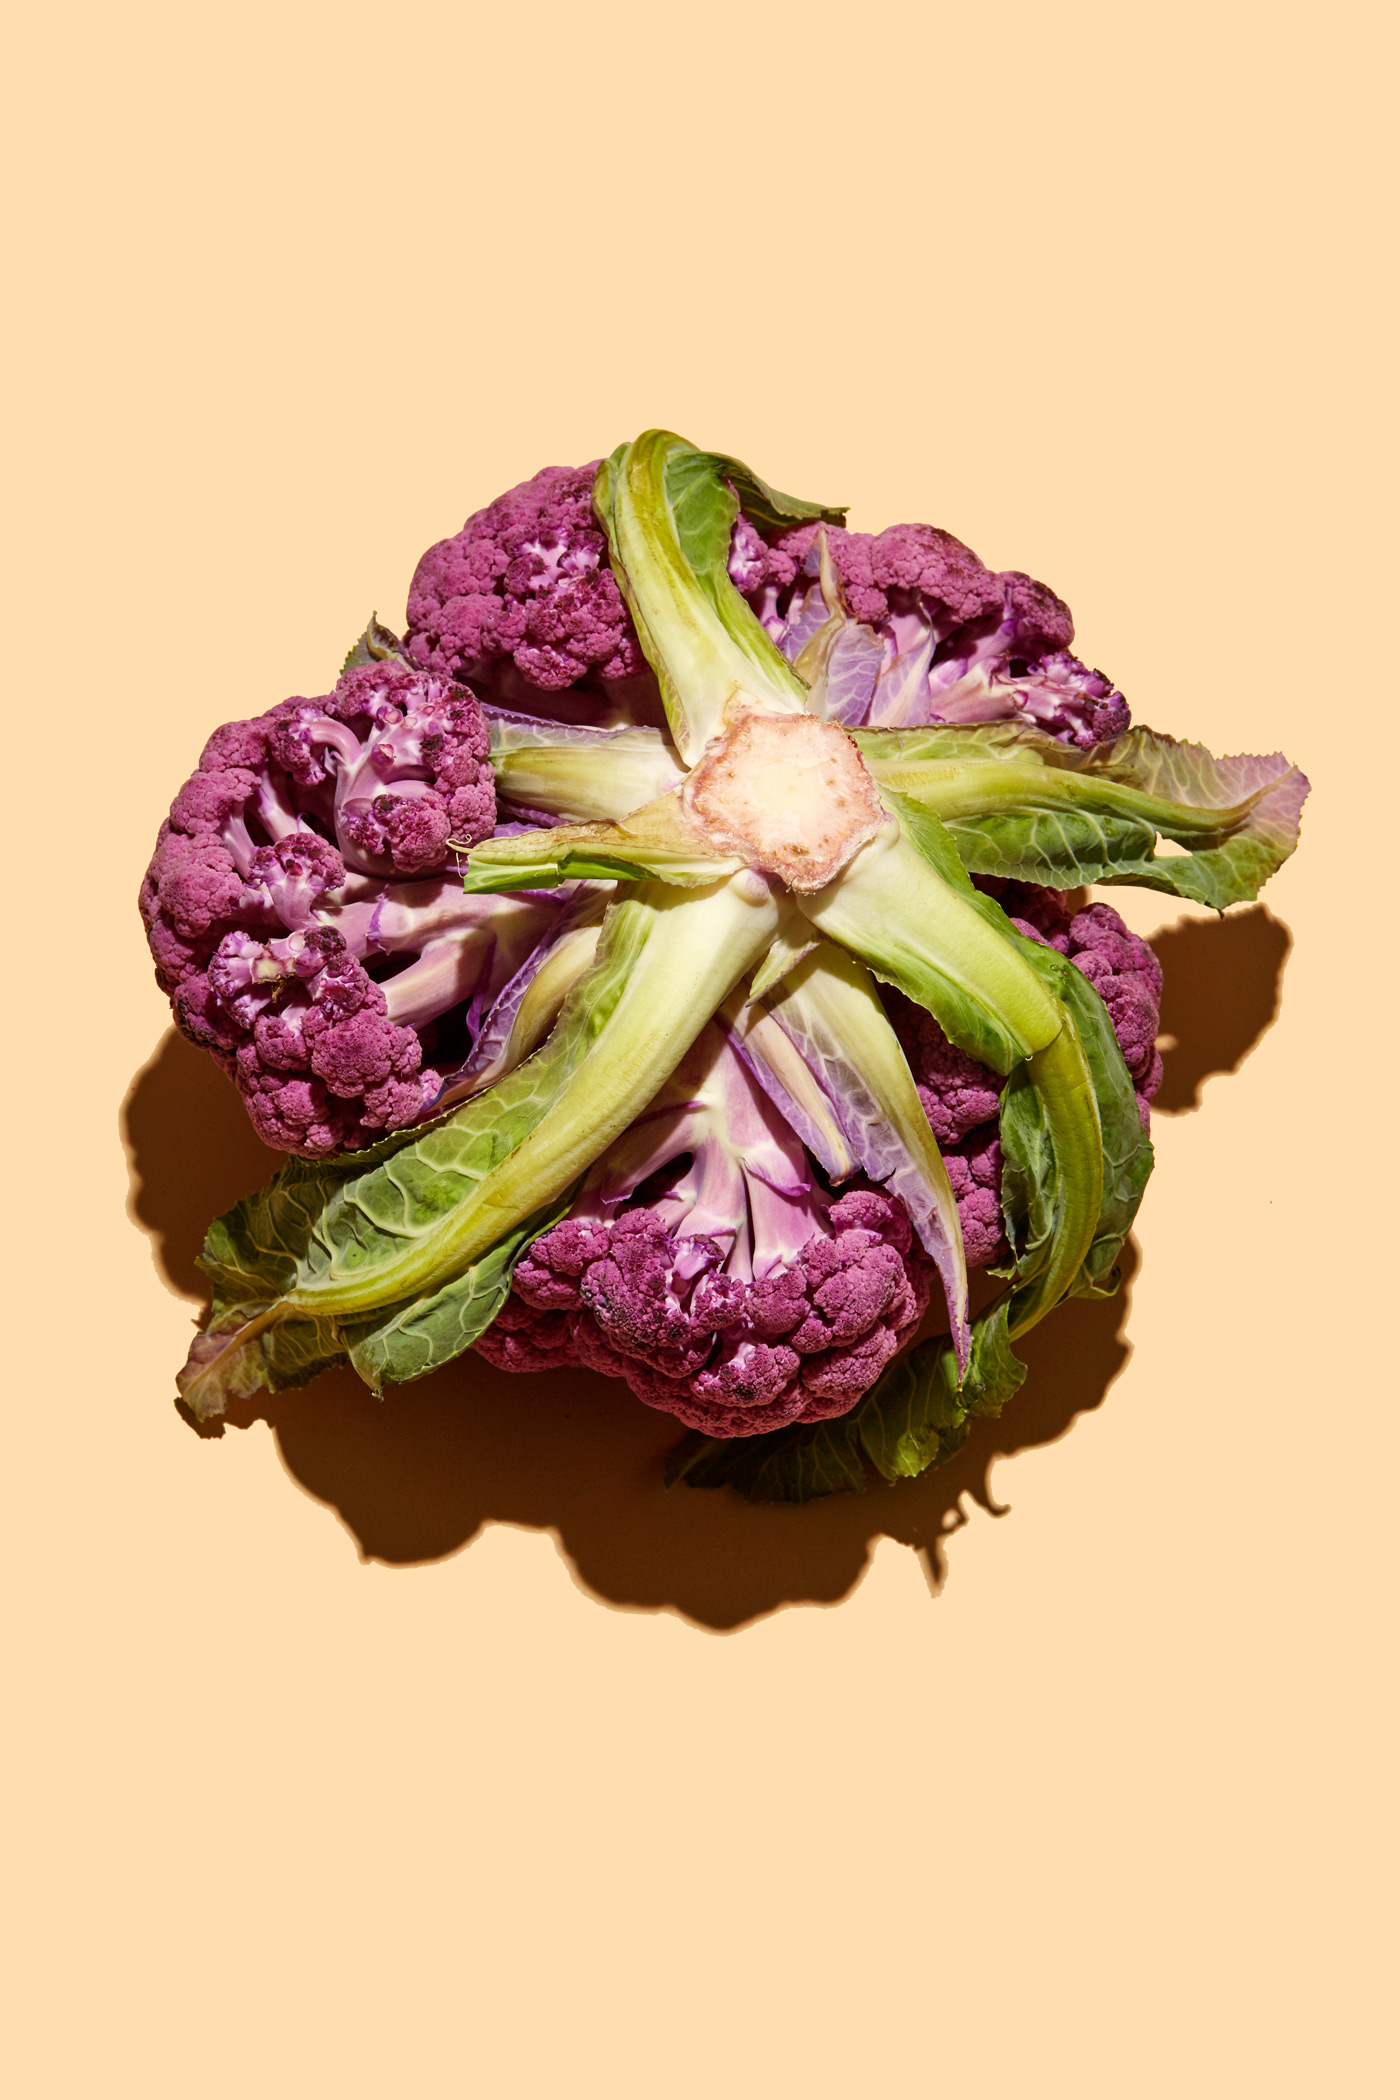 healthiest foods, health food, diet, nutrition, time.com stock, purple cauliflower